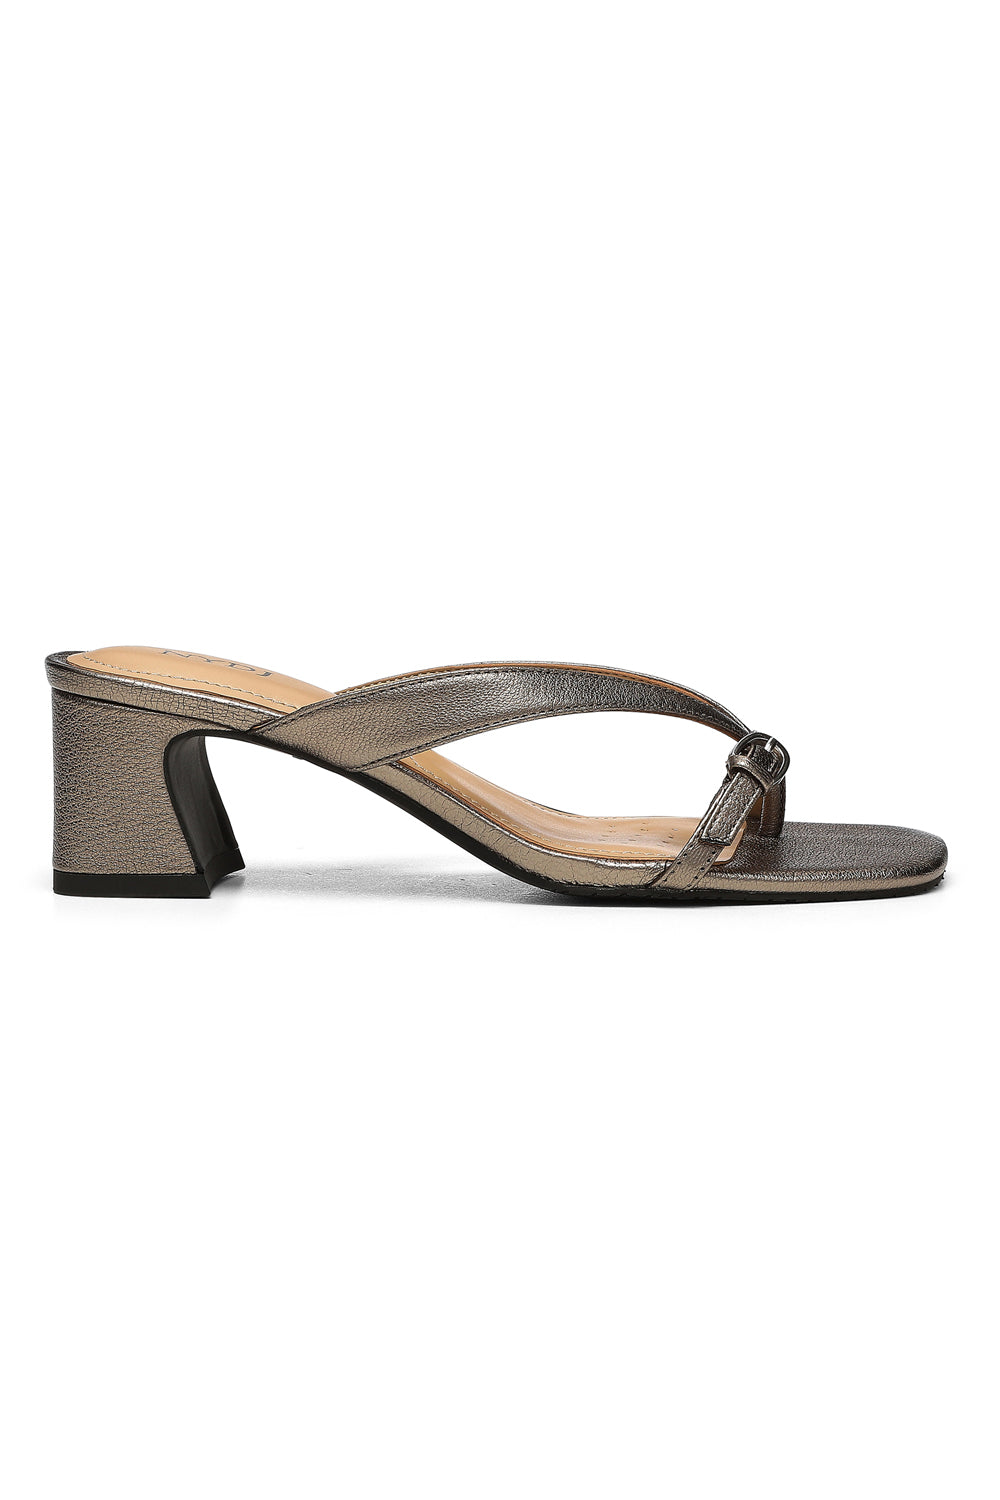 NYDJ Glam Block Heel Sandals In Tumbled Metallic Leather - Pewter